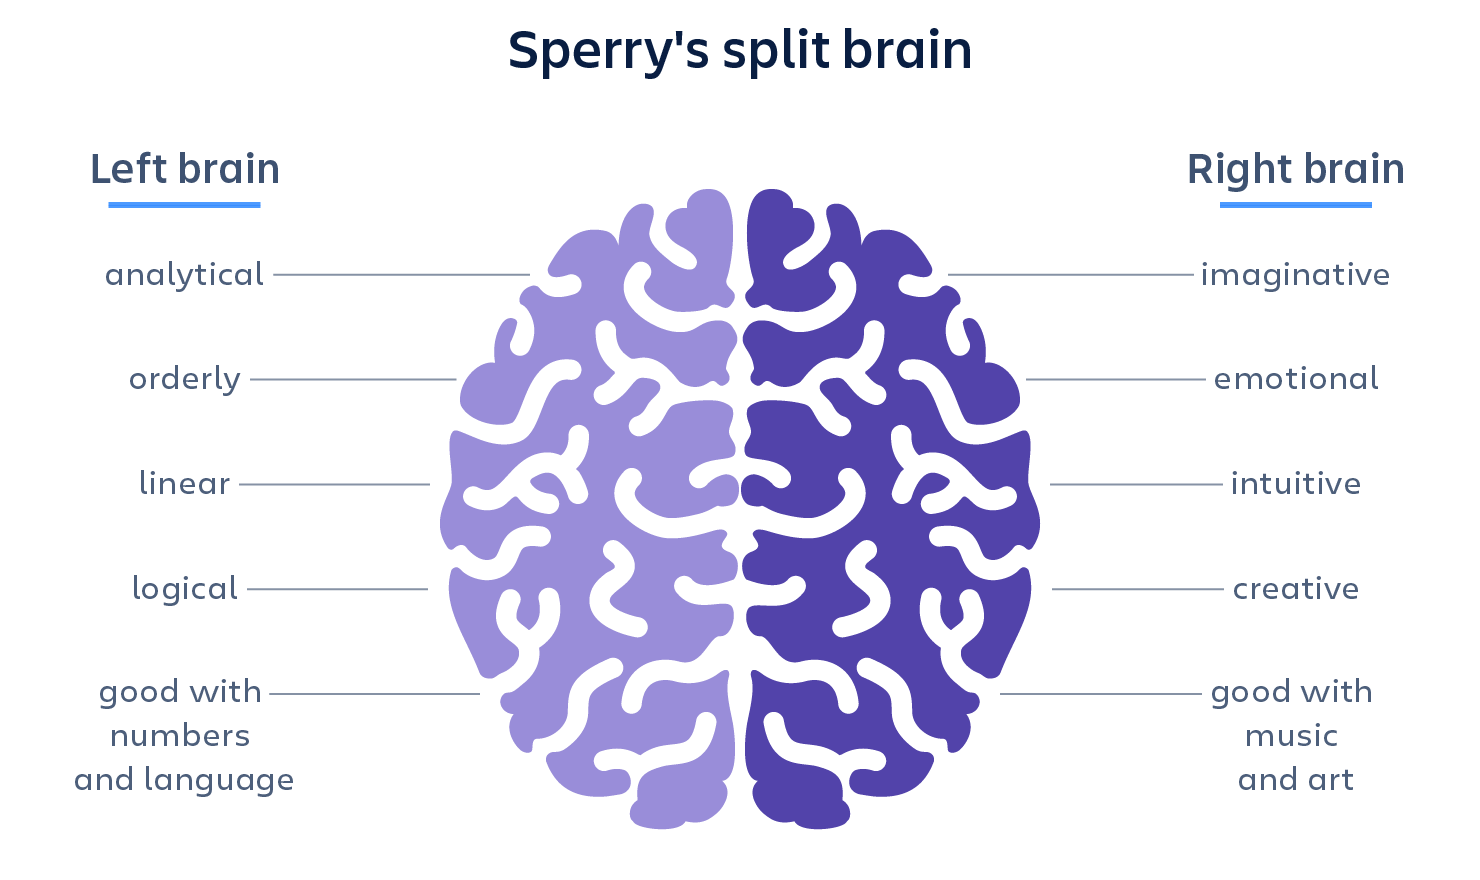 Sperry's split brain